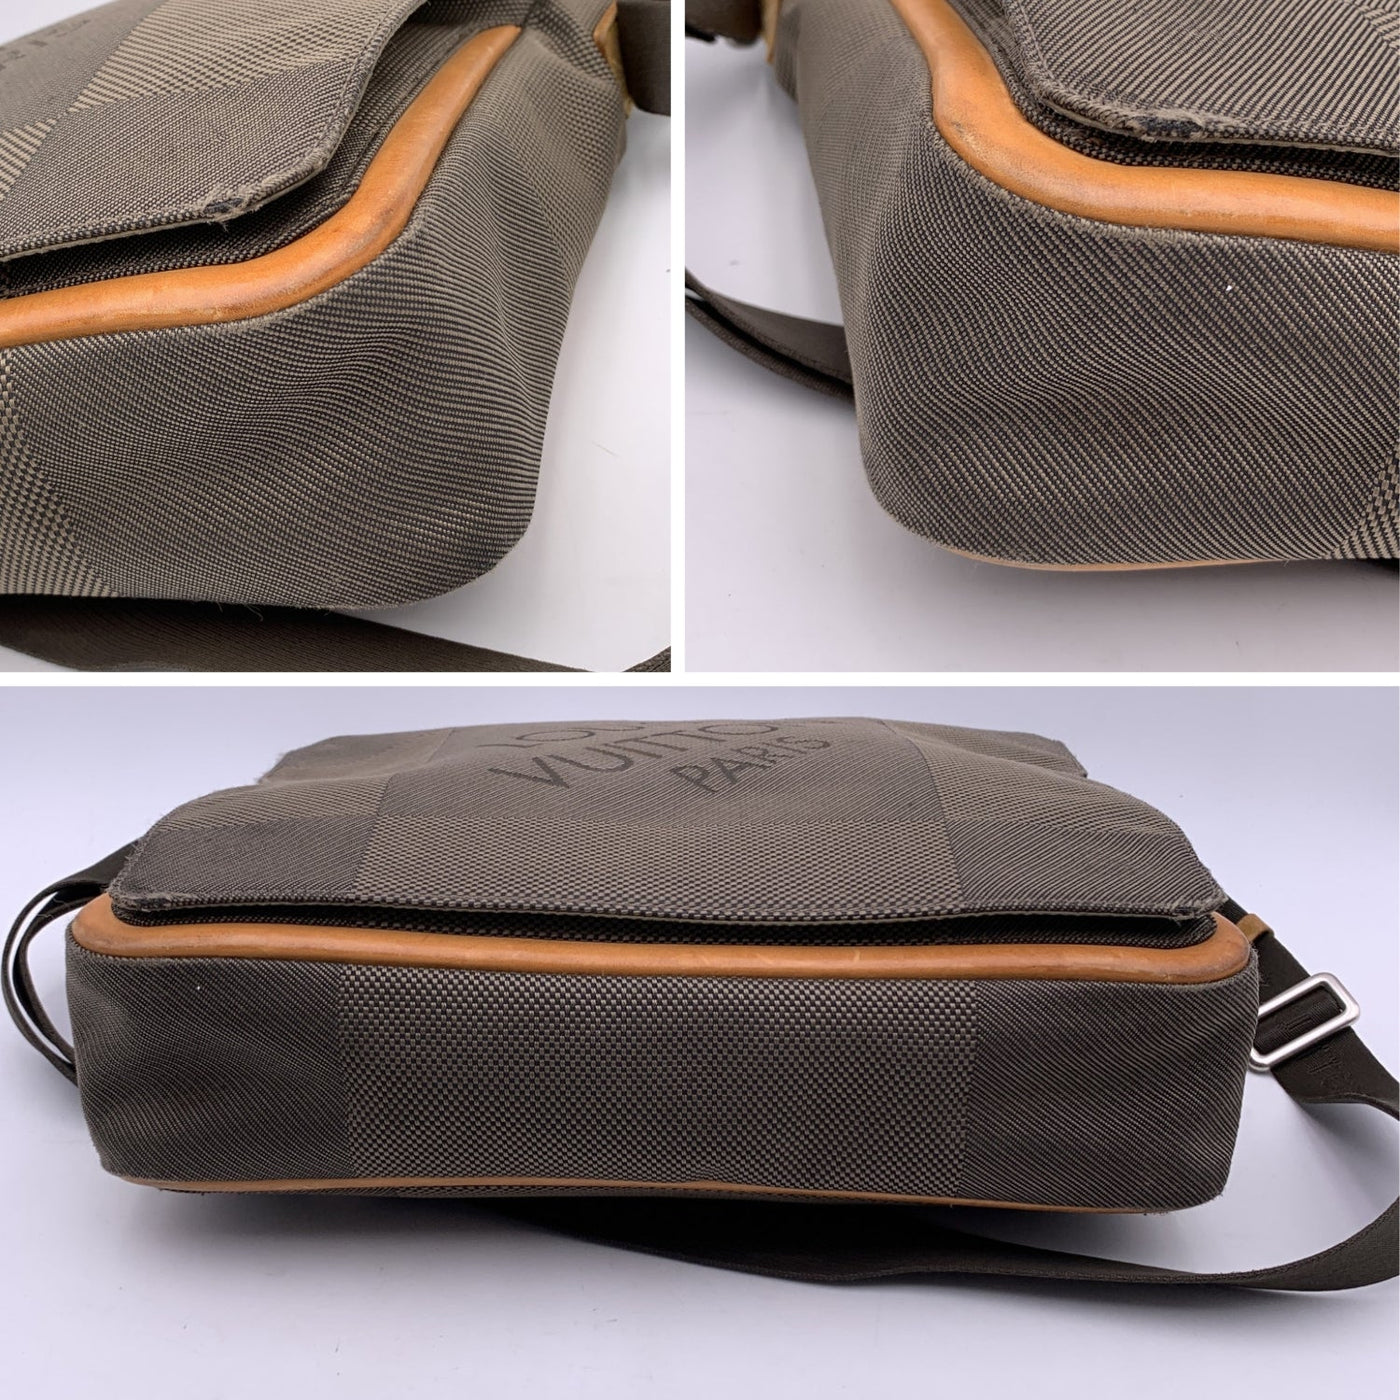 Louis Vuitton Damier Geant Messenger - Brown Messenger Bags, Bags